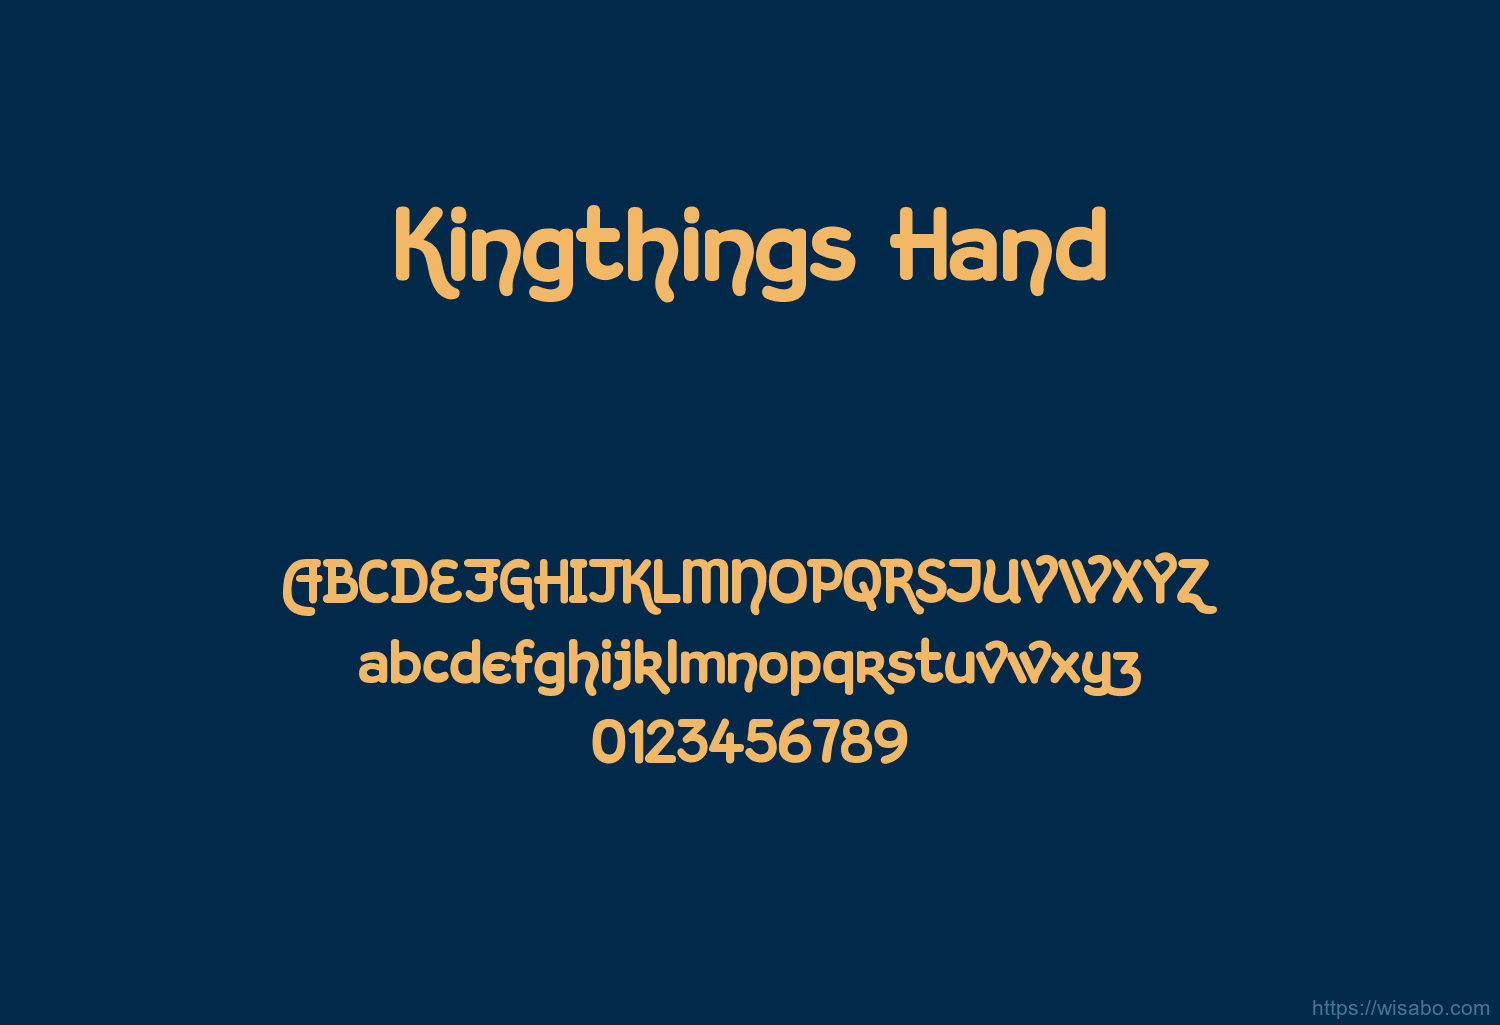 Kingthings Hand